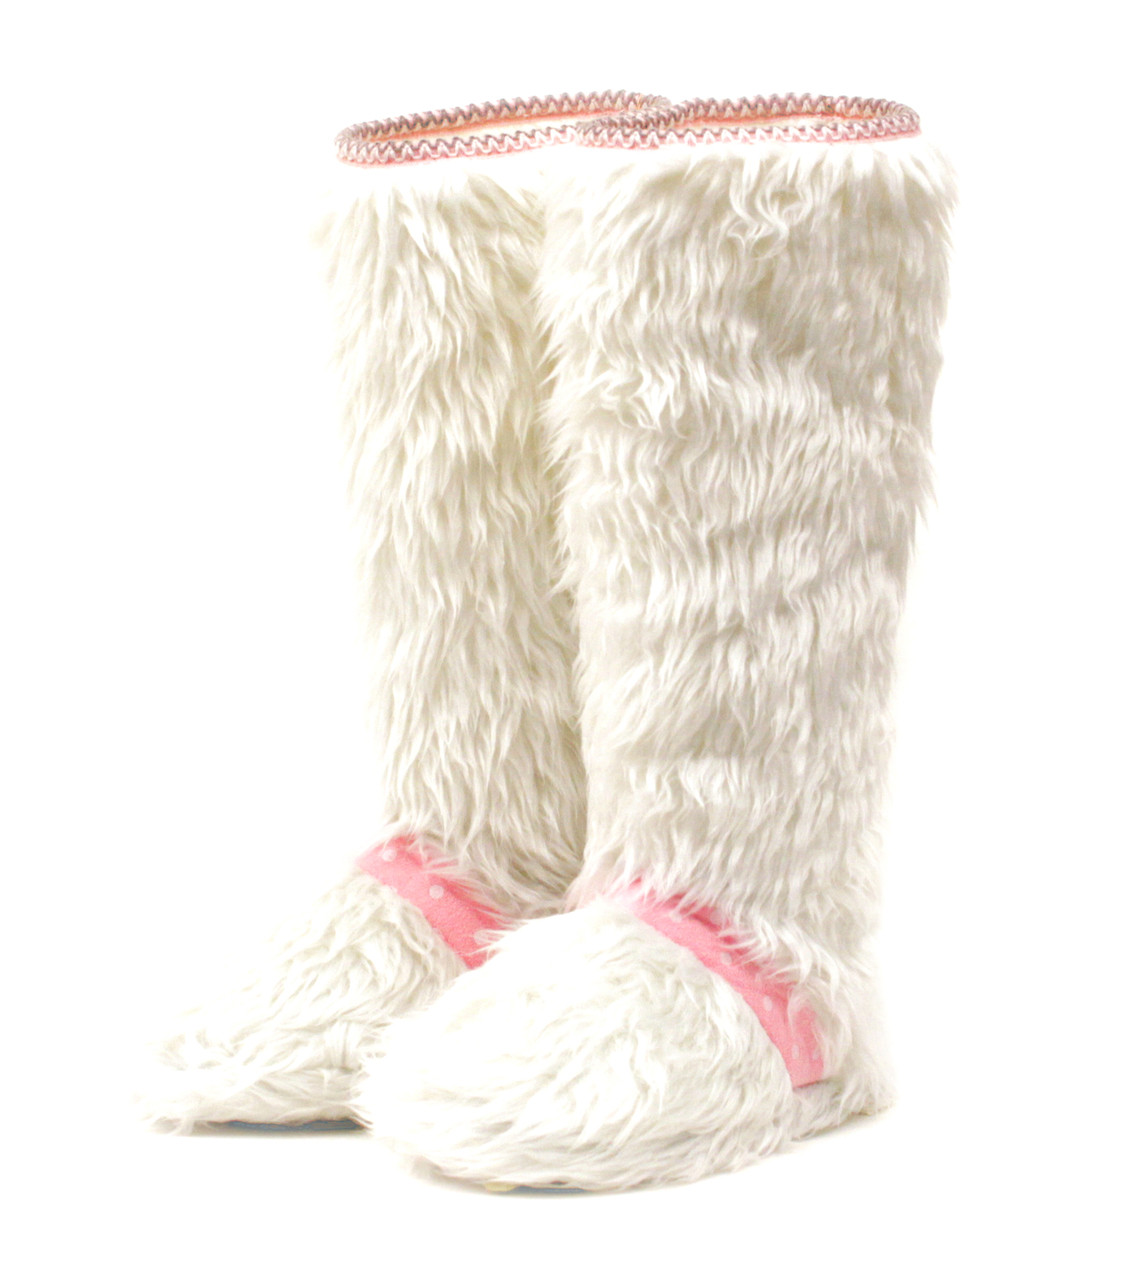 winter slipper boots